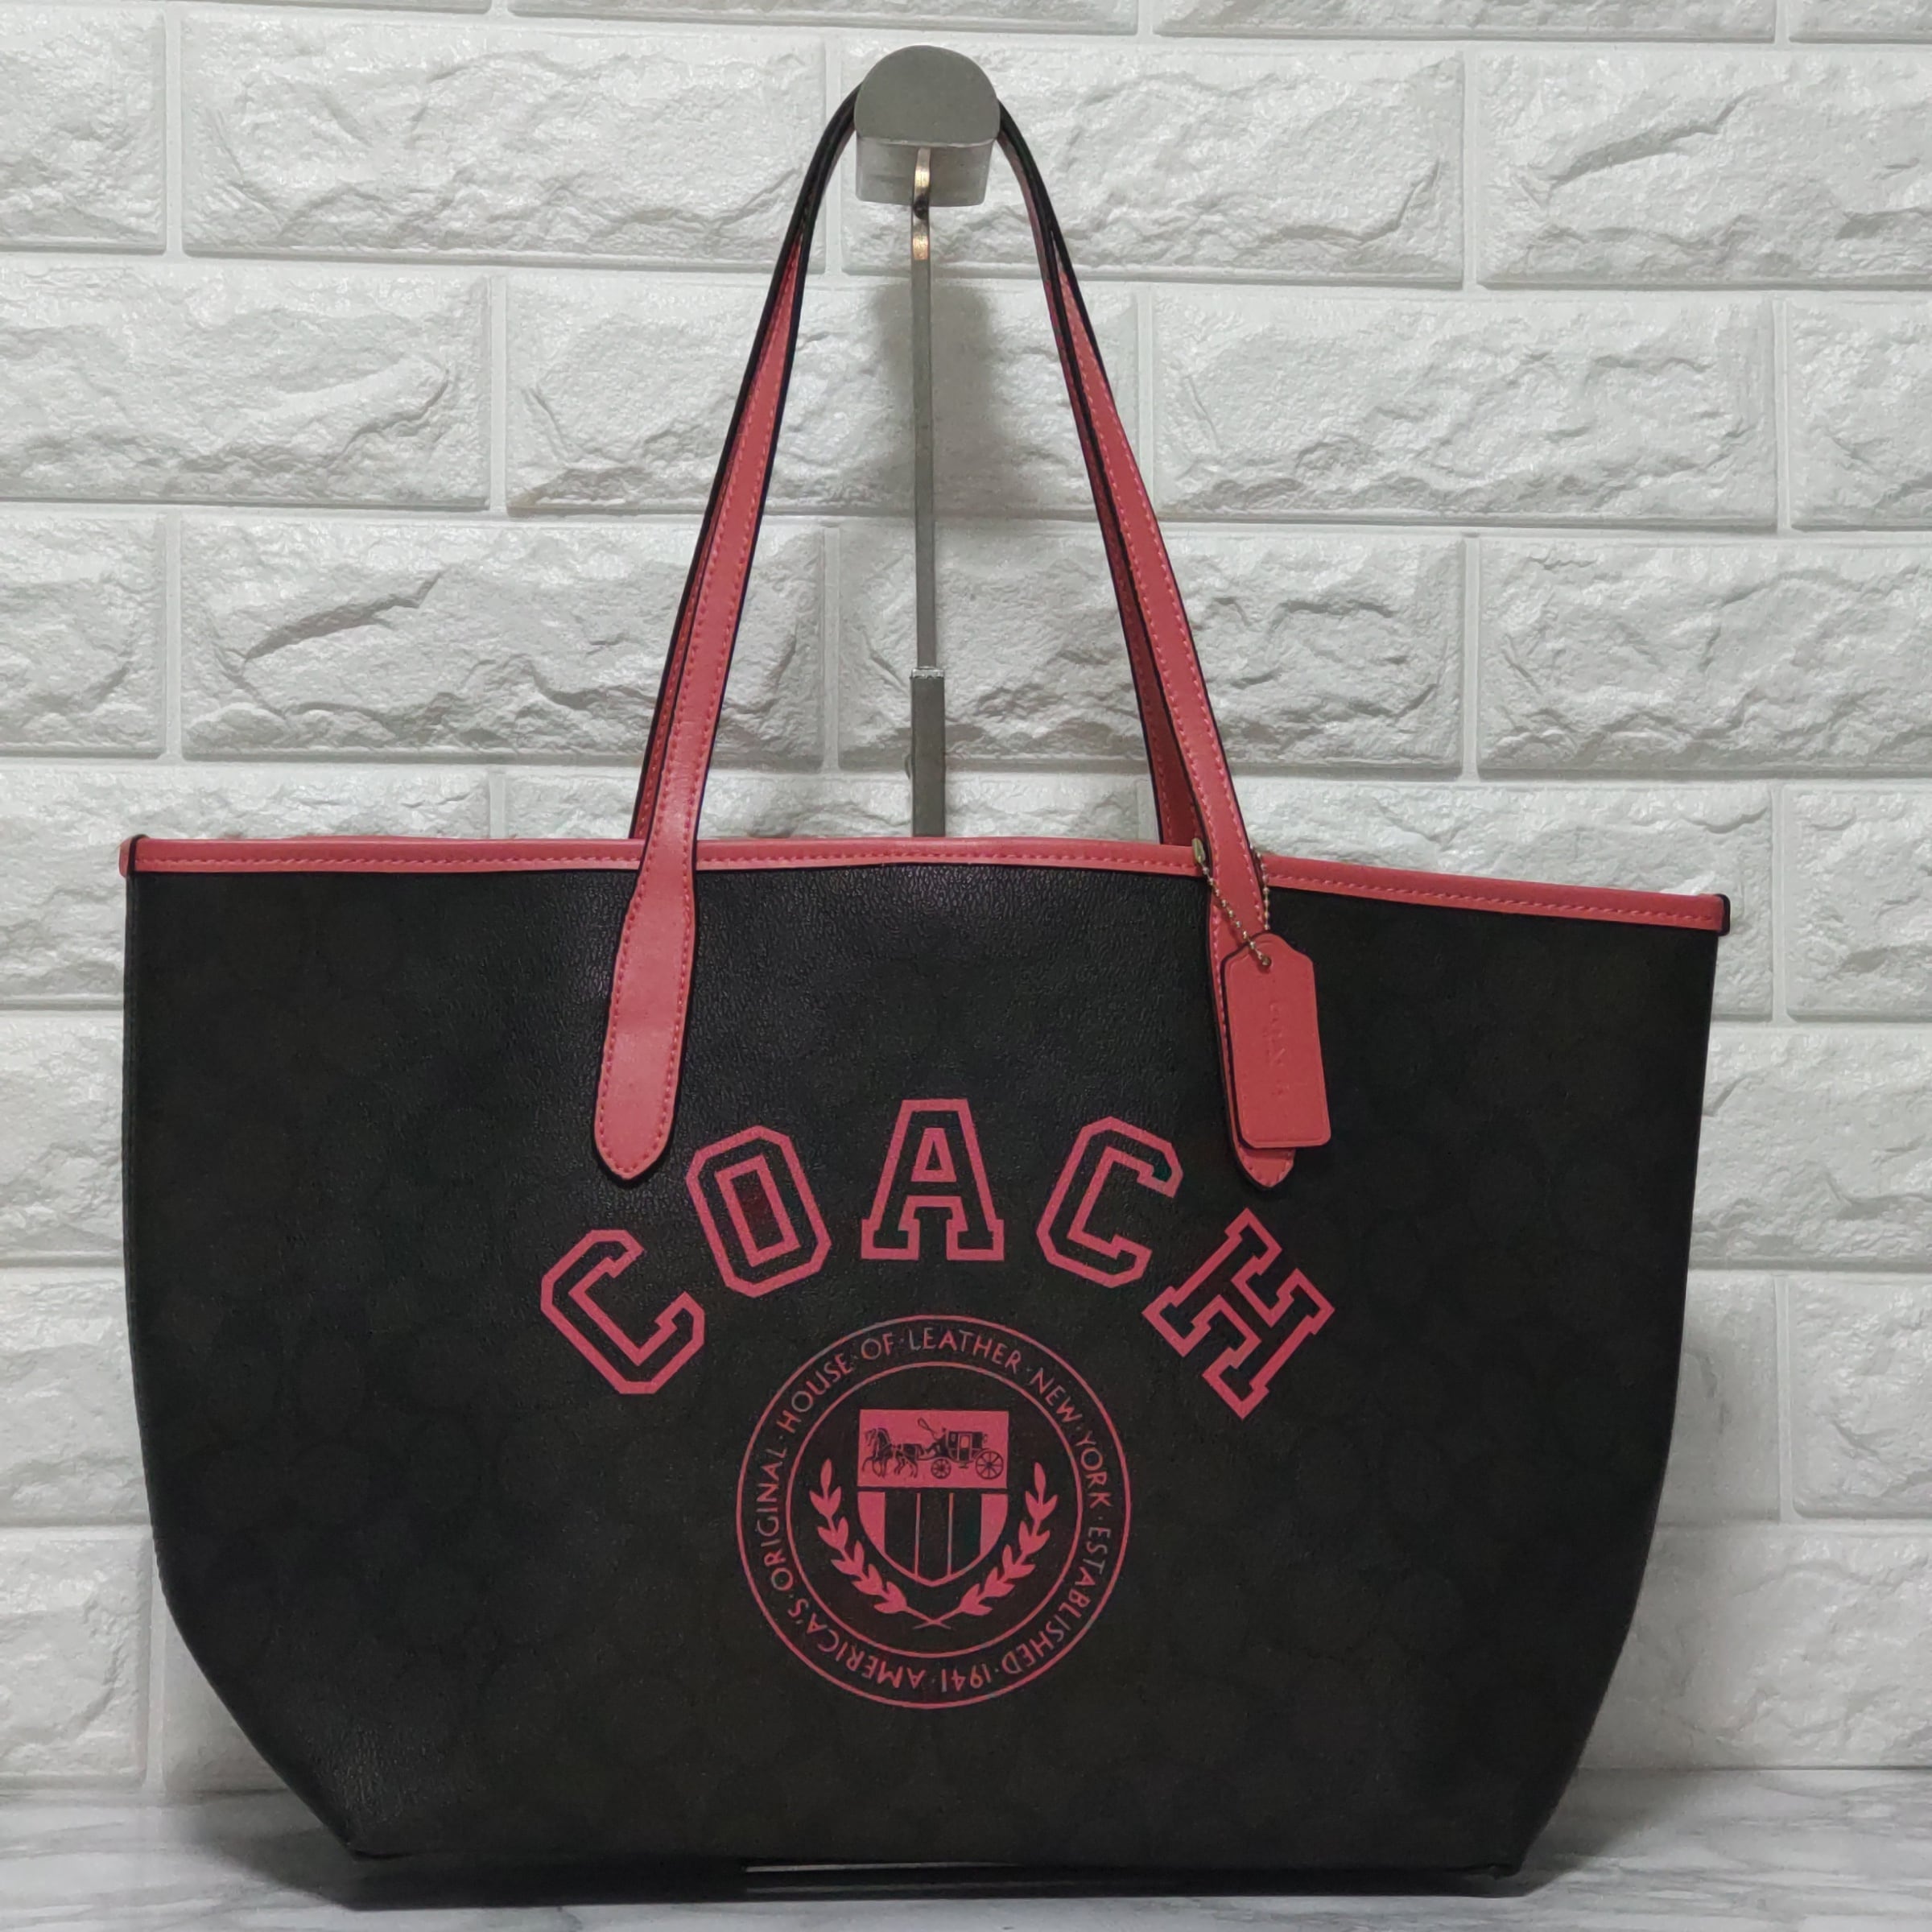 COACH(コーチ) トートバッグ美品  - CB869